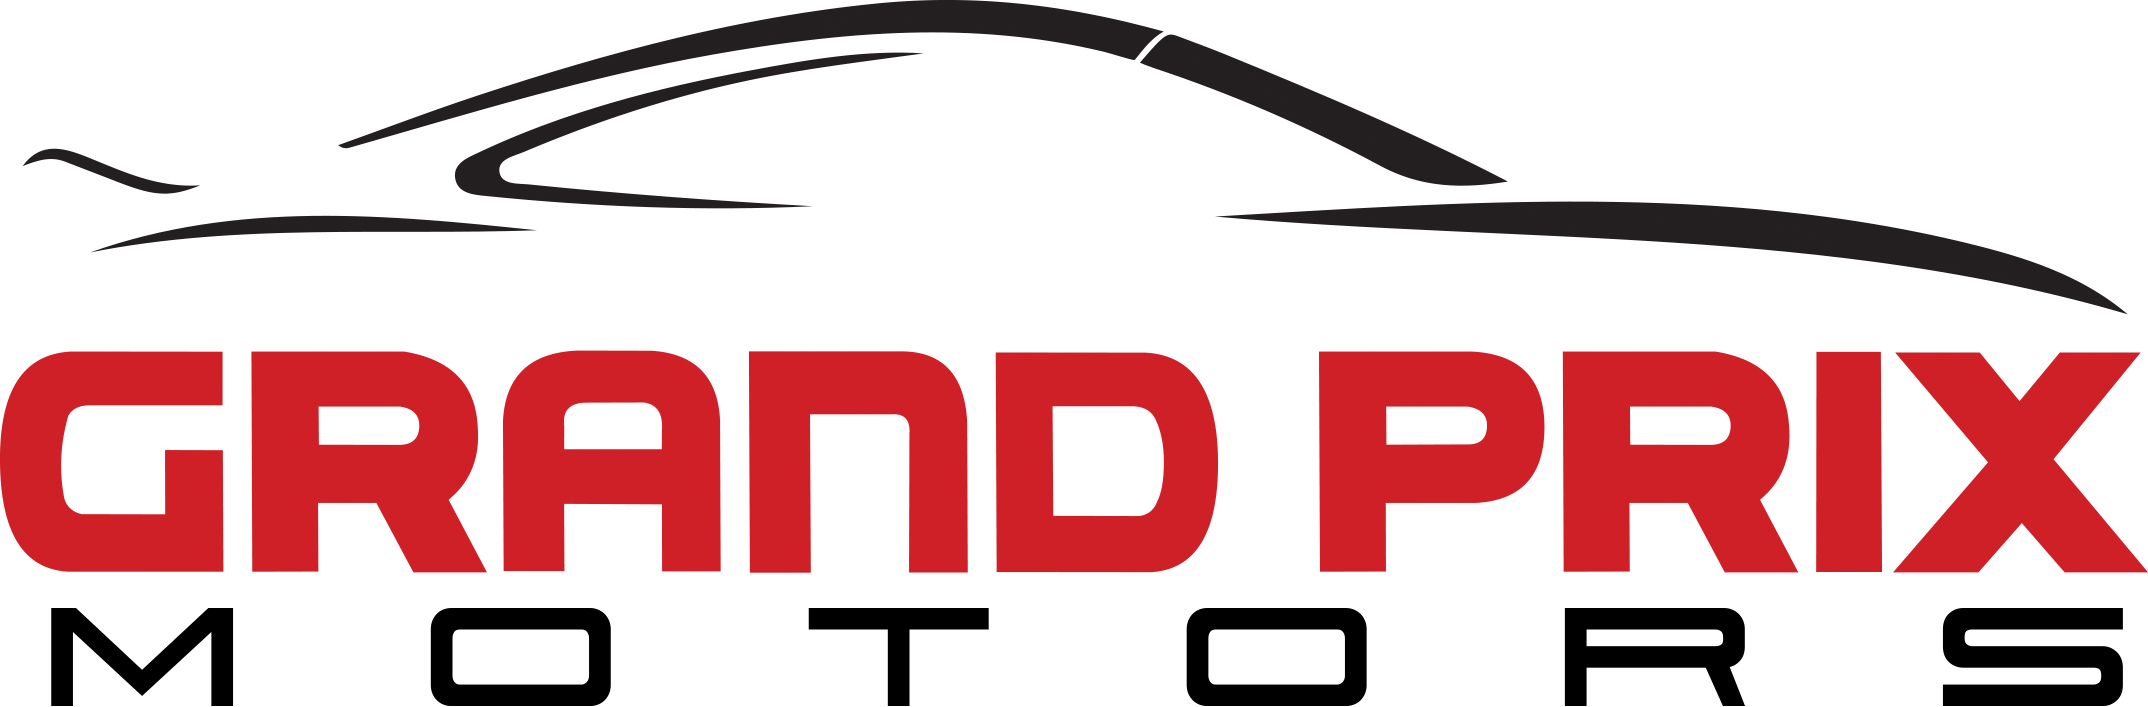 Used Car Dealership Logo - LogoDix